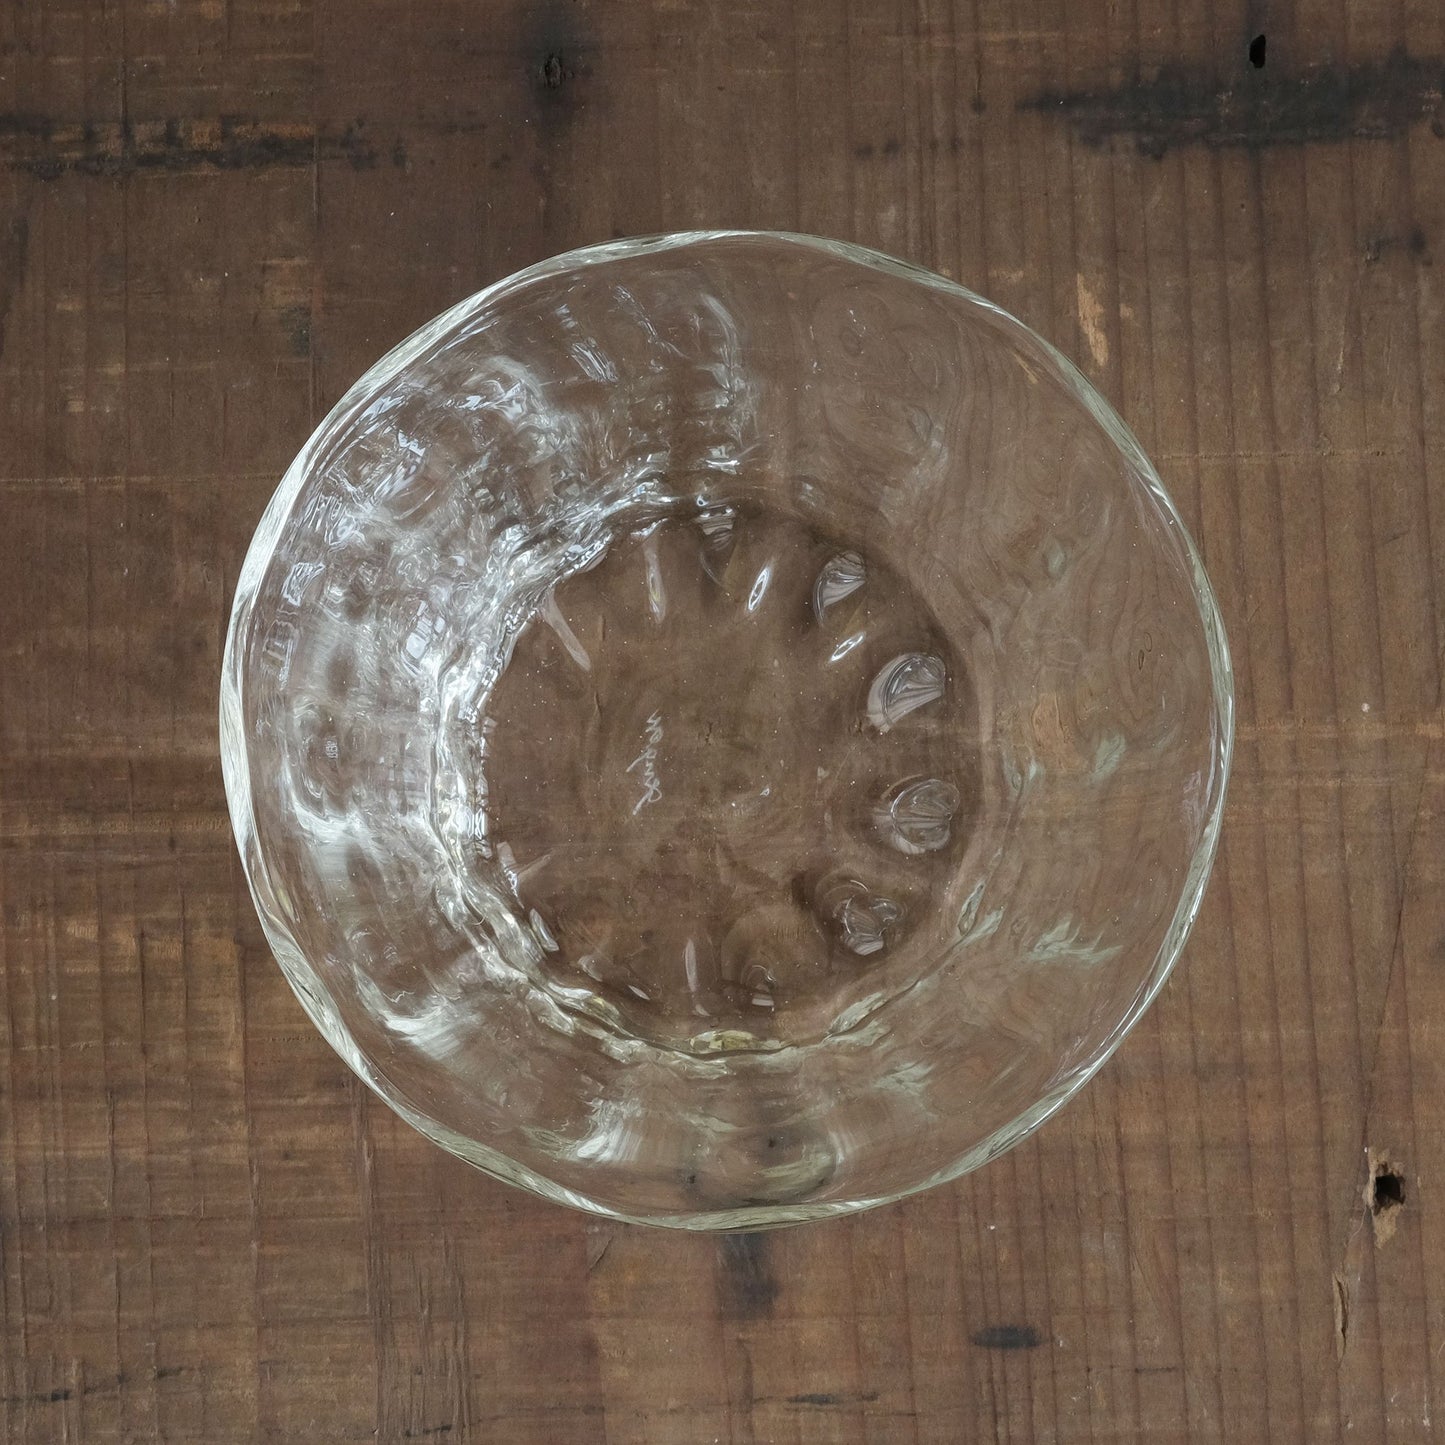 Glass Studio Gengensha Molded Small Bowl